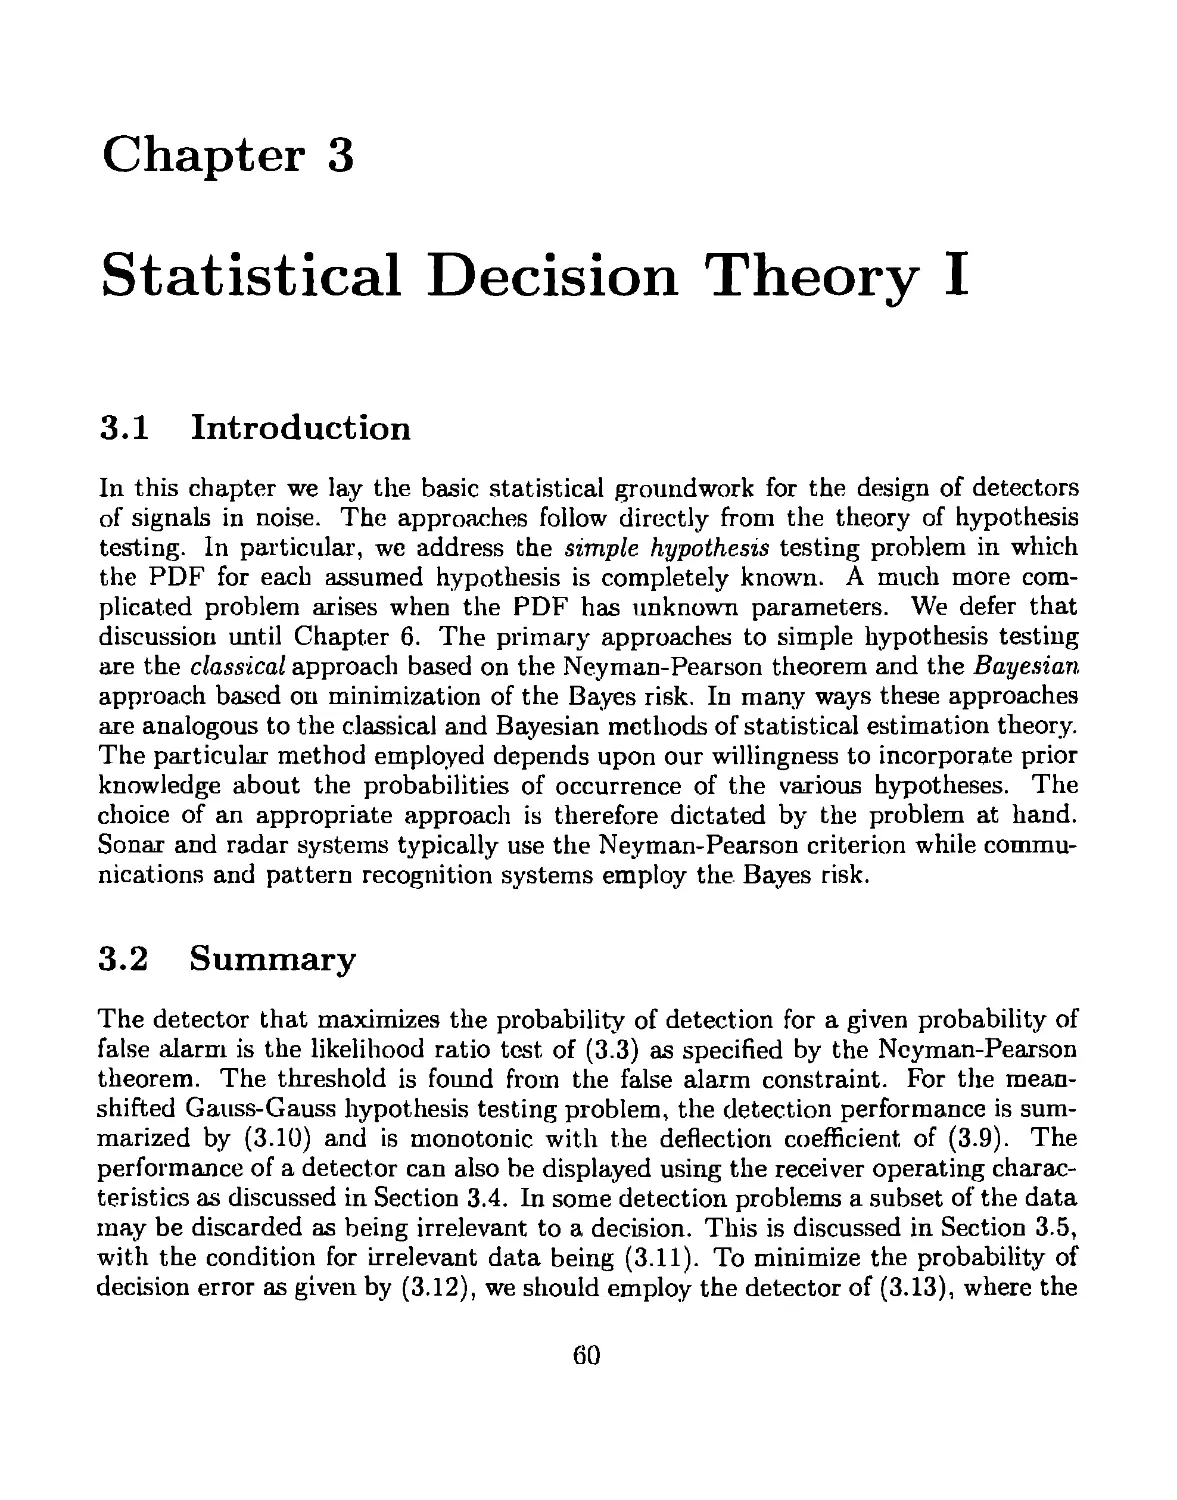 3 Statistical Decision Theory I
3.2 Summary